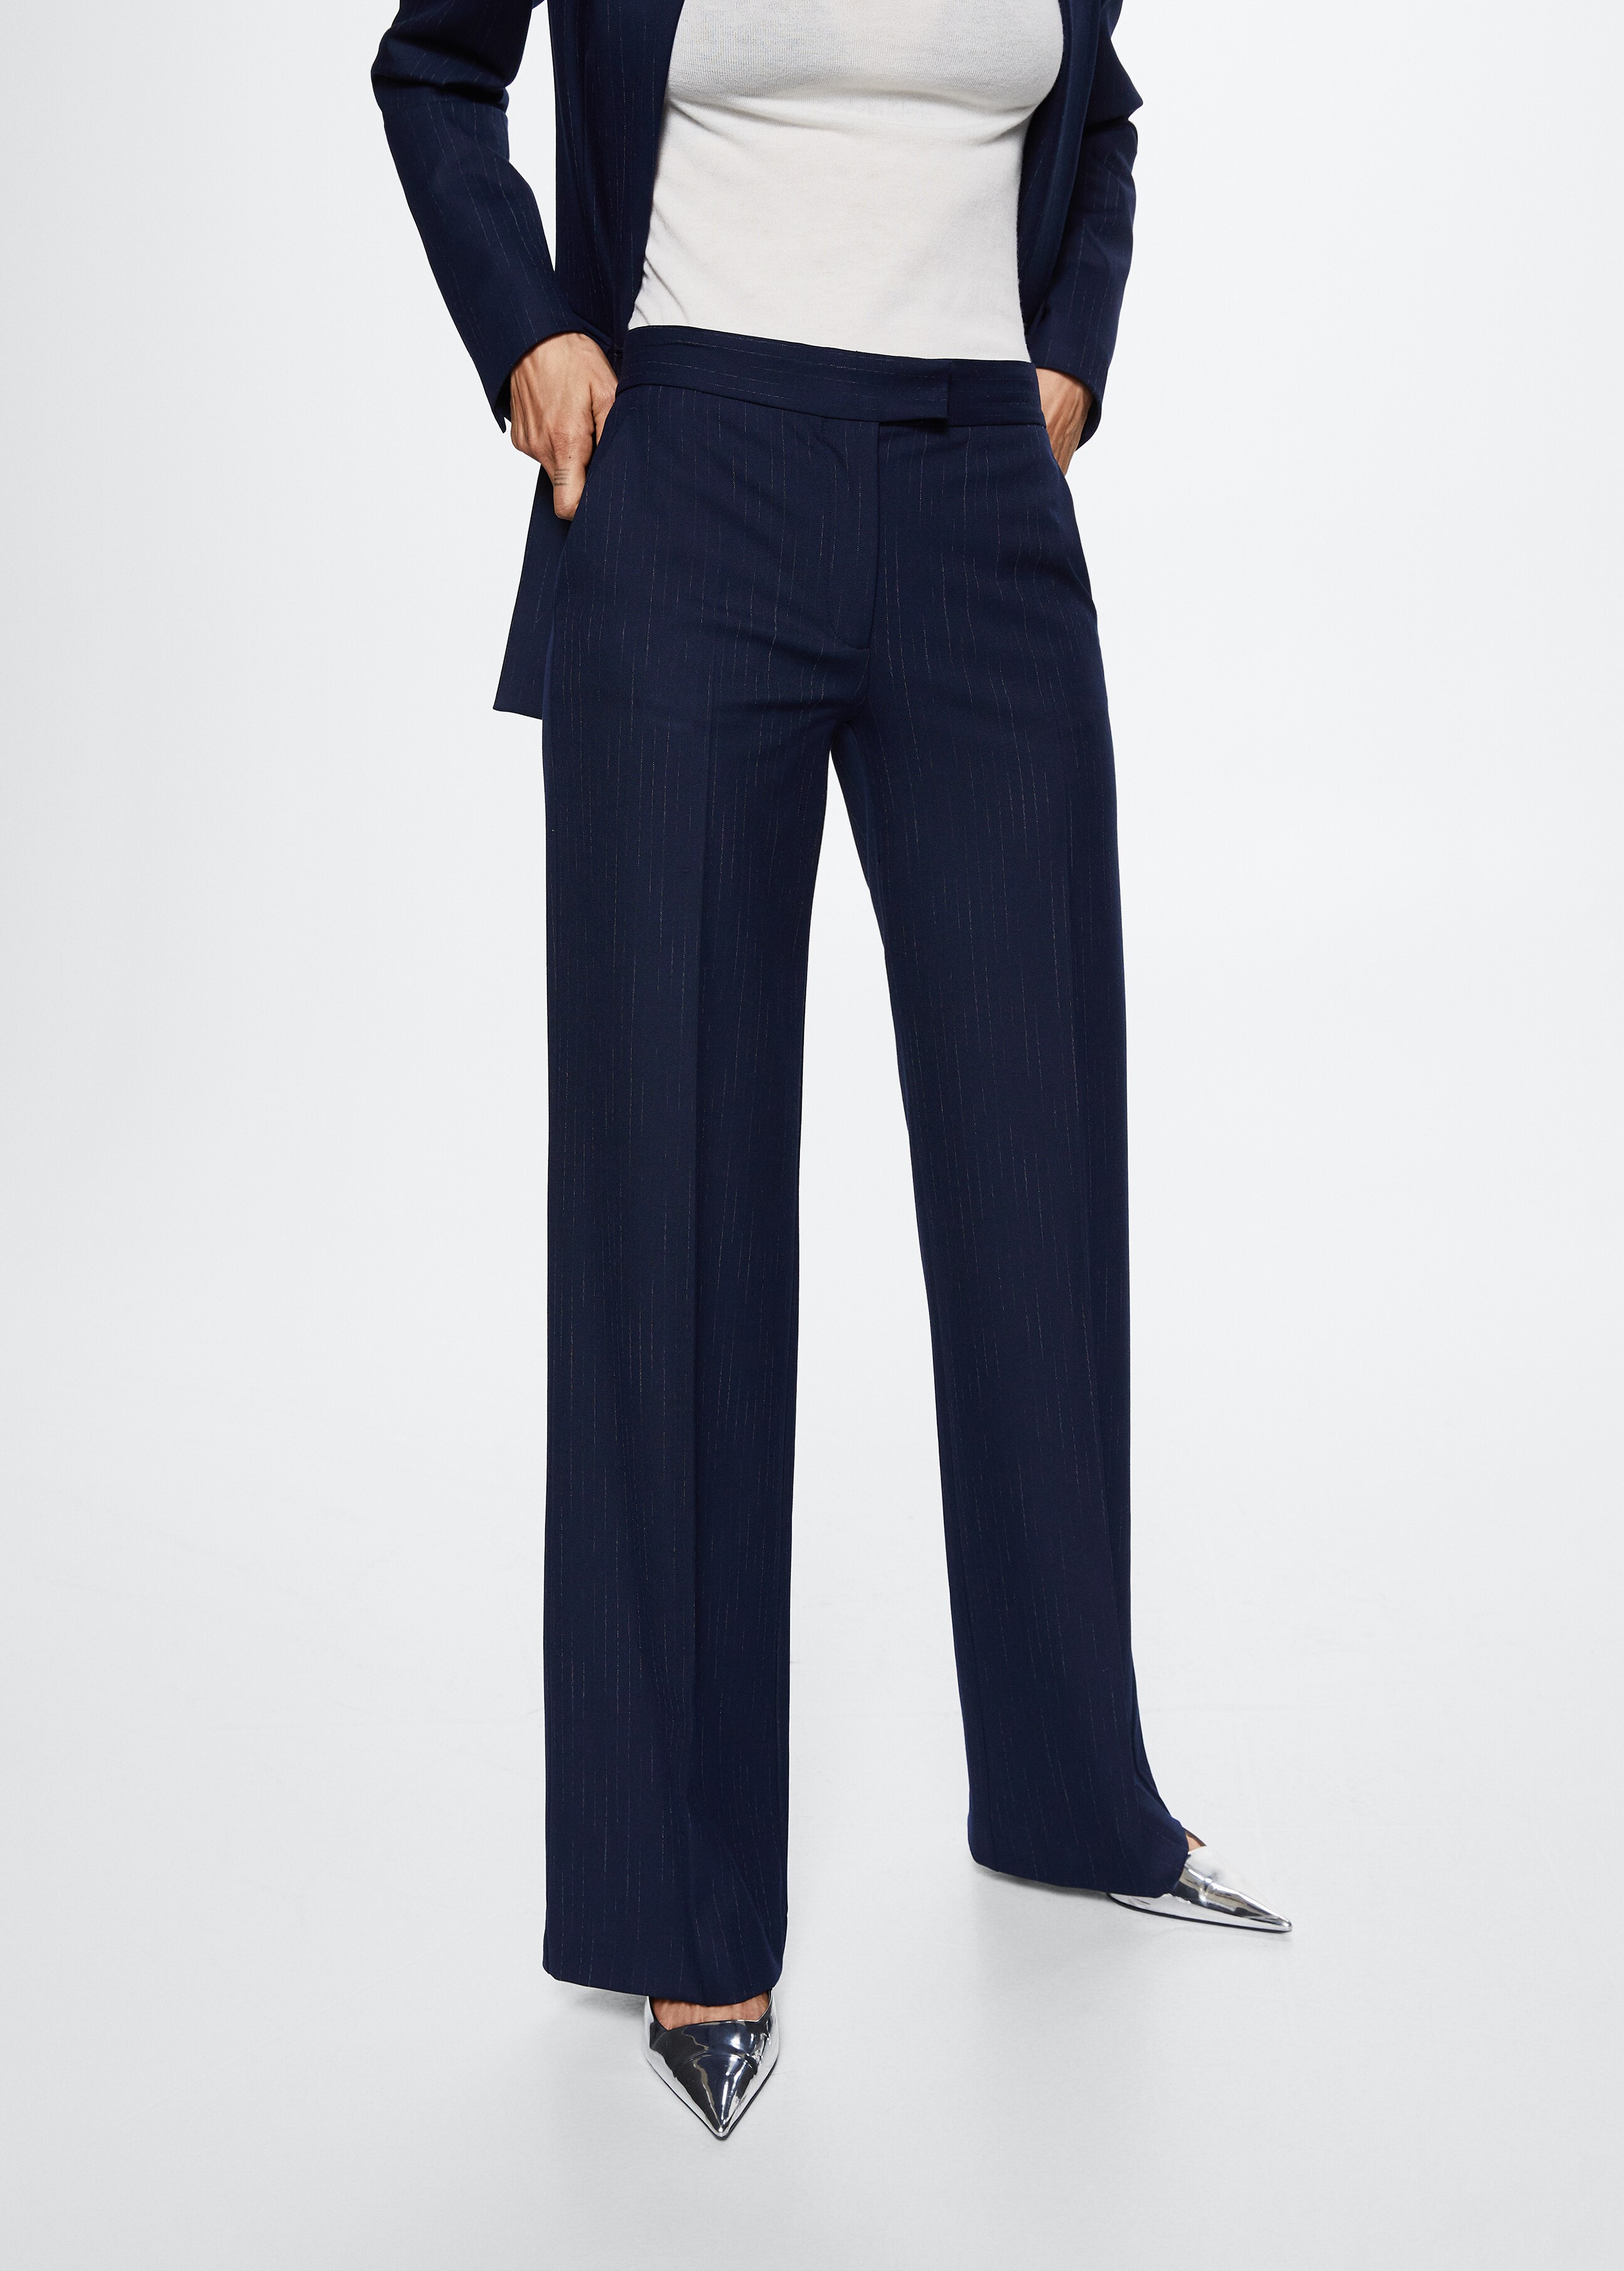 Pinstripe suit trousers - Medium plane